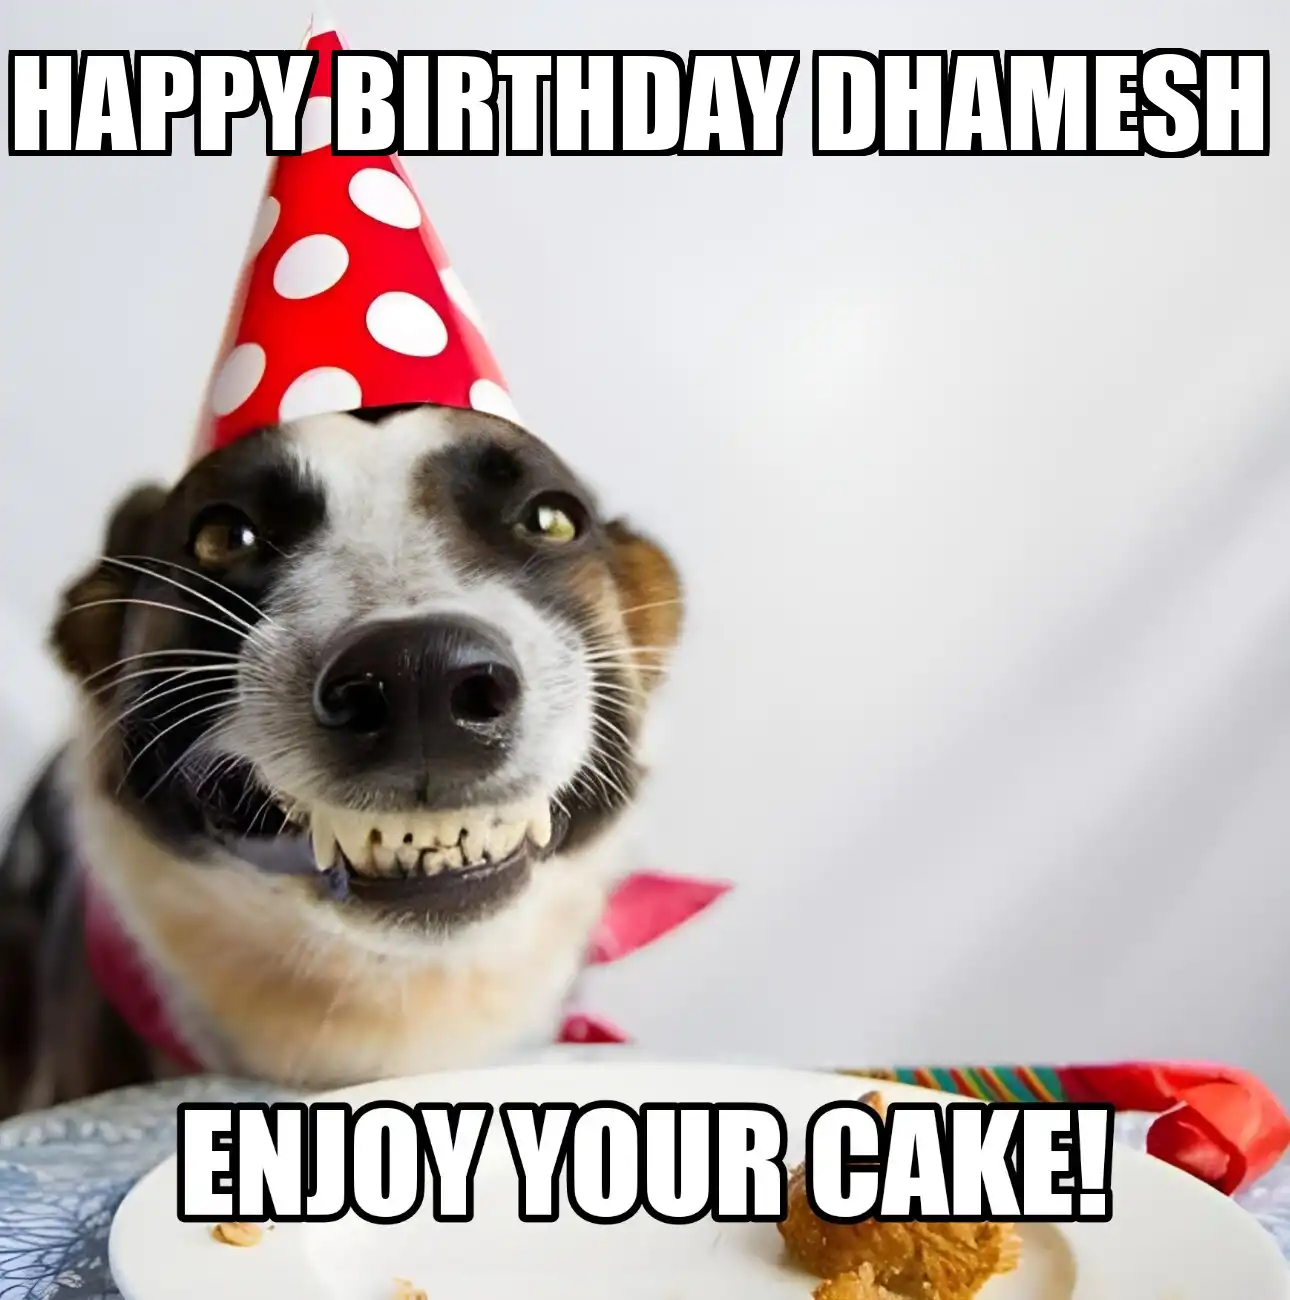 Happy Birthday Dhamesh Enjoy Your Cake Dog Meme